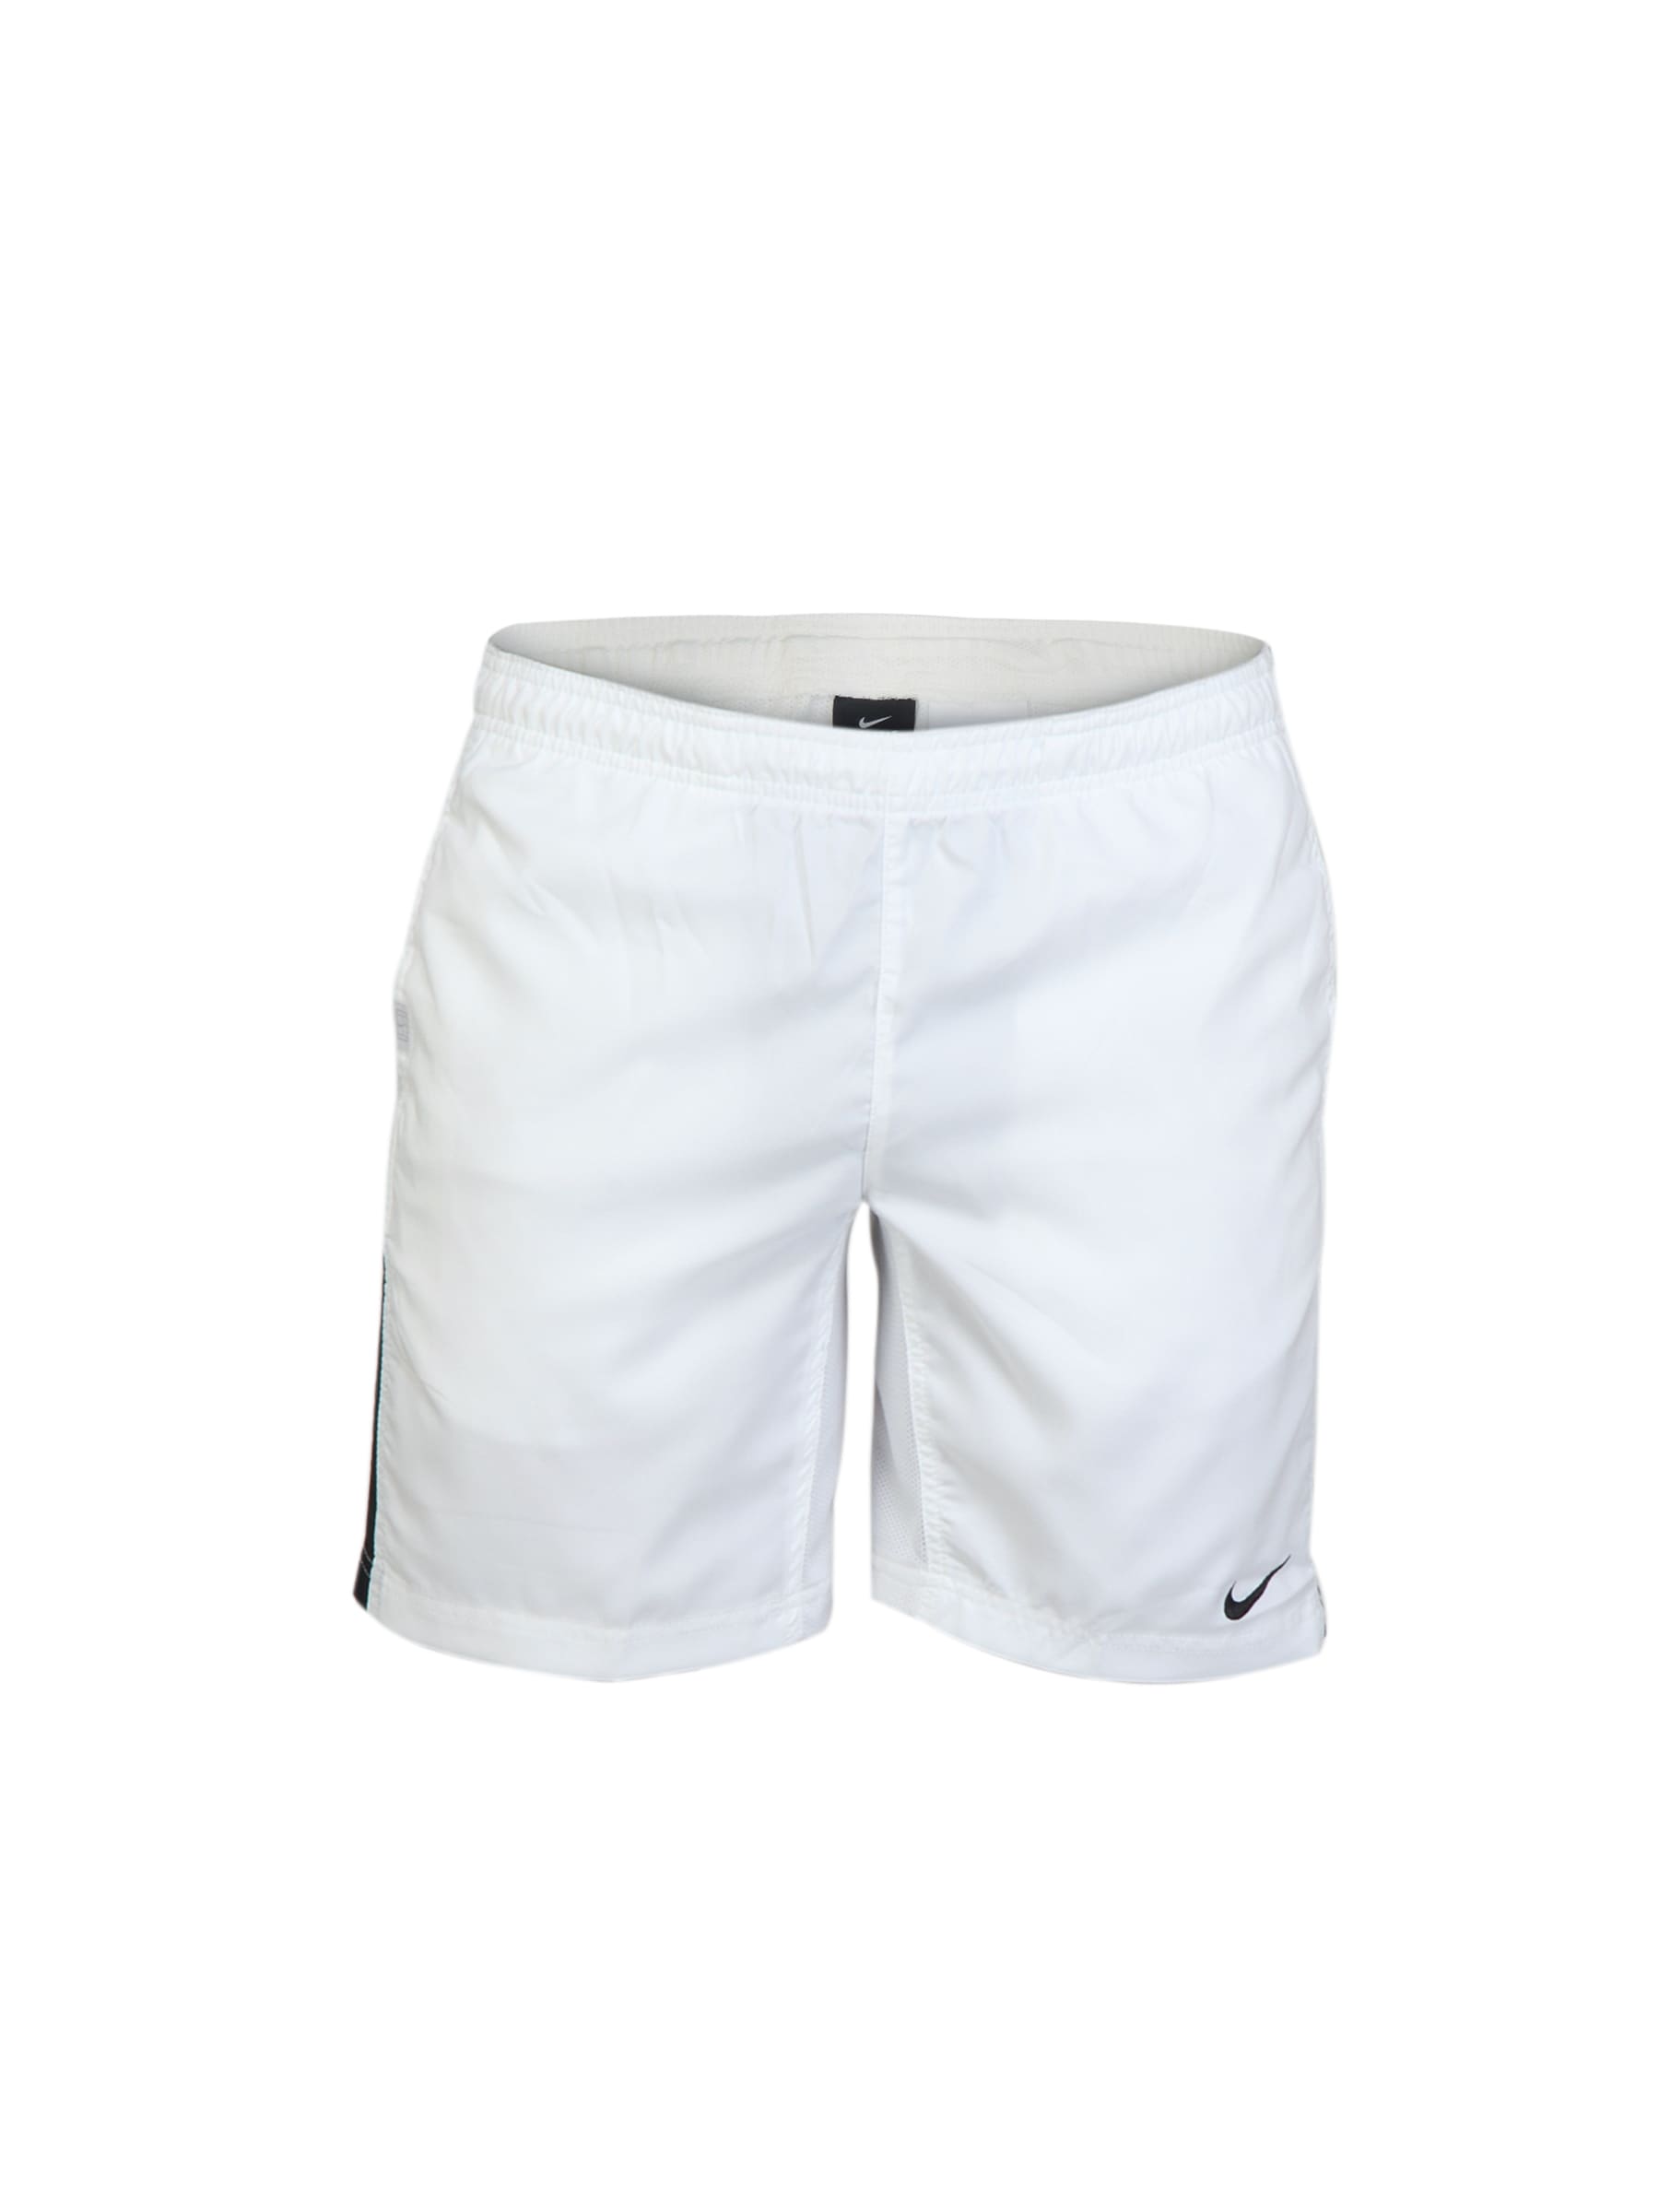 Nike Men Solid White Shorts